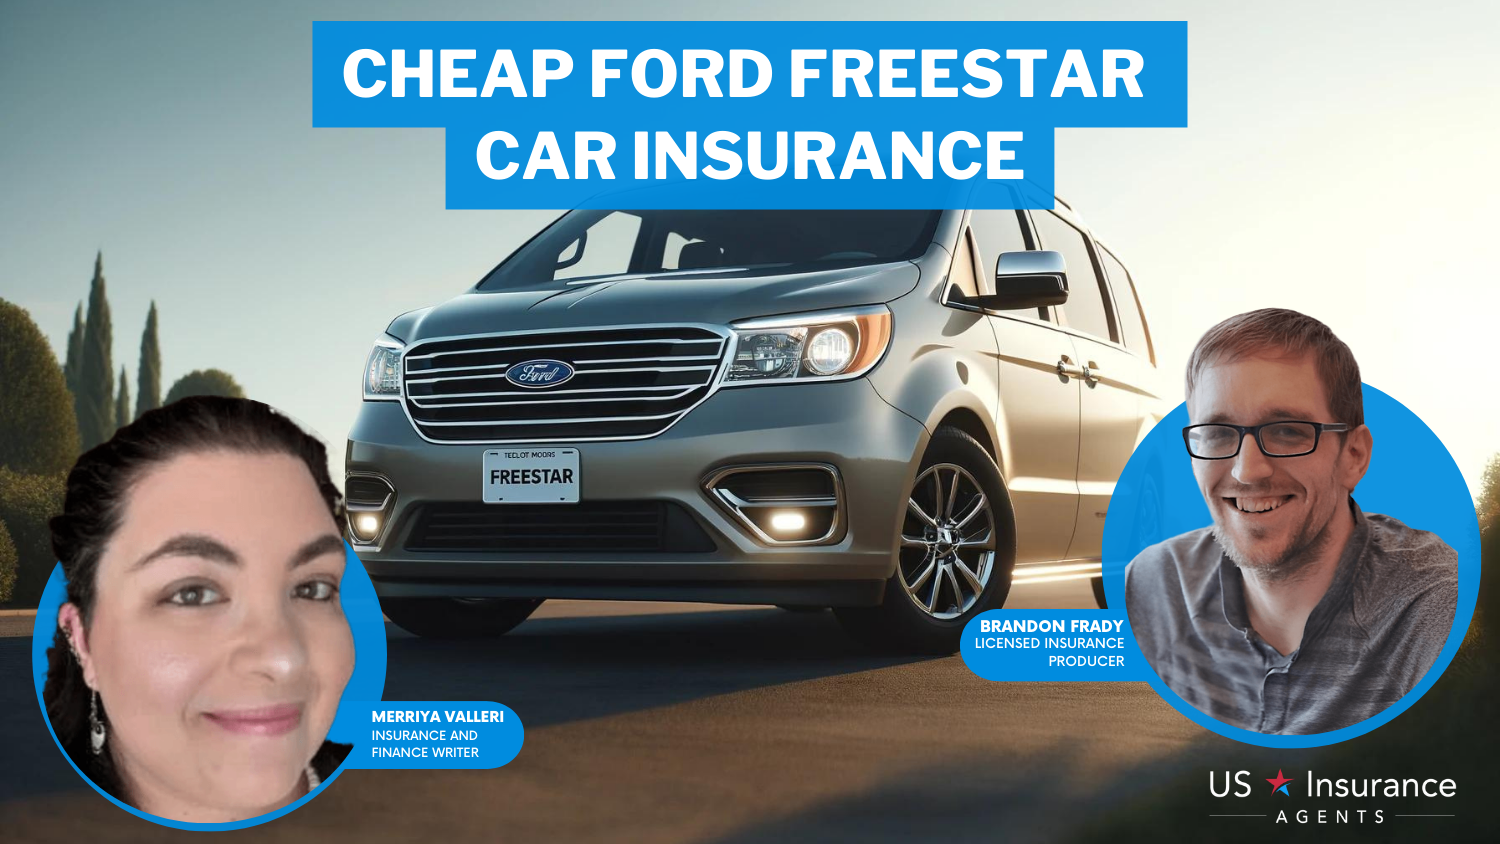 State Farm, Progressive and Nationwide: Cheap Ford Freestar Car Insurance